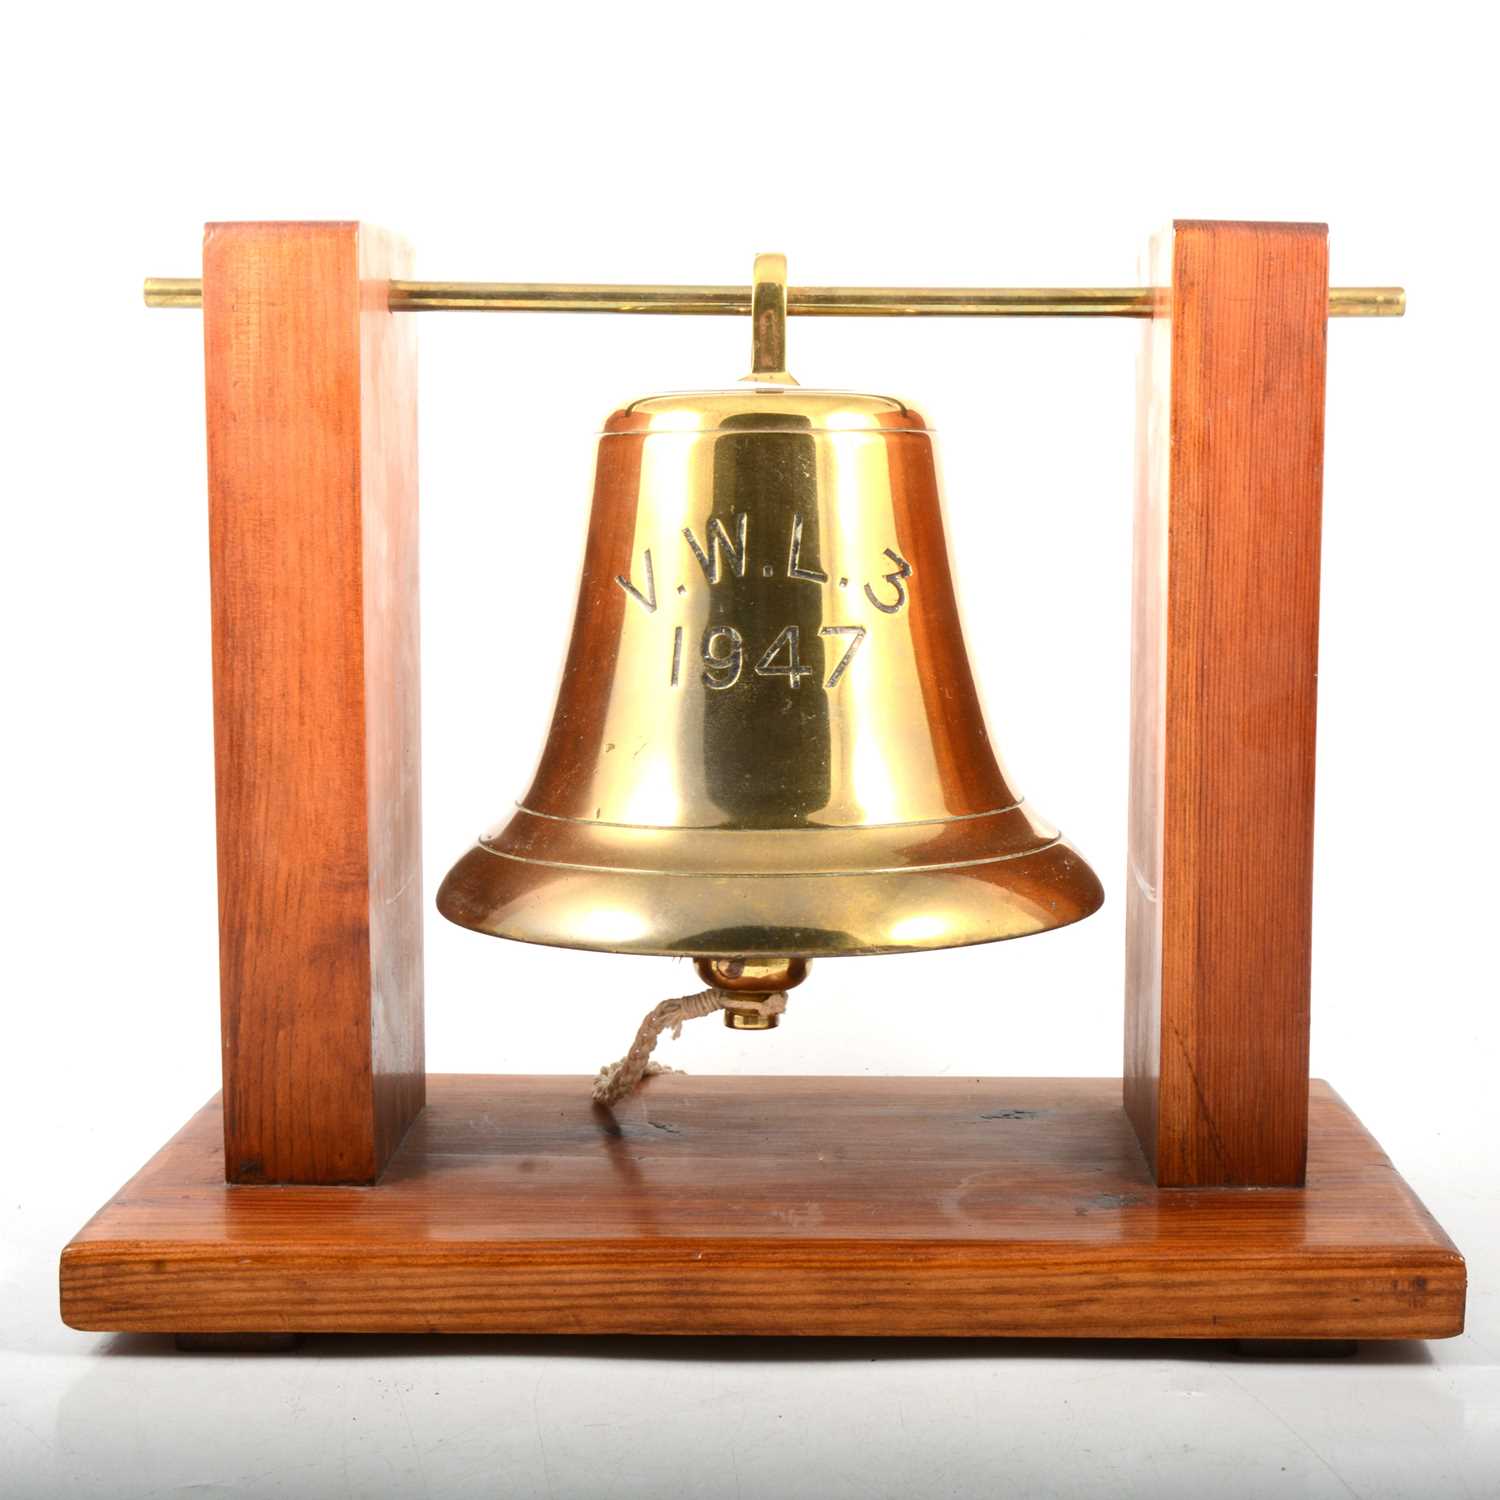 Lot 107 - Ship's bell, VWLS 1947